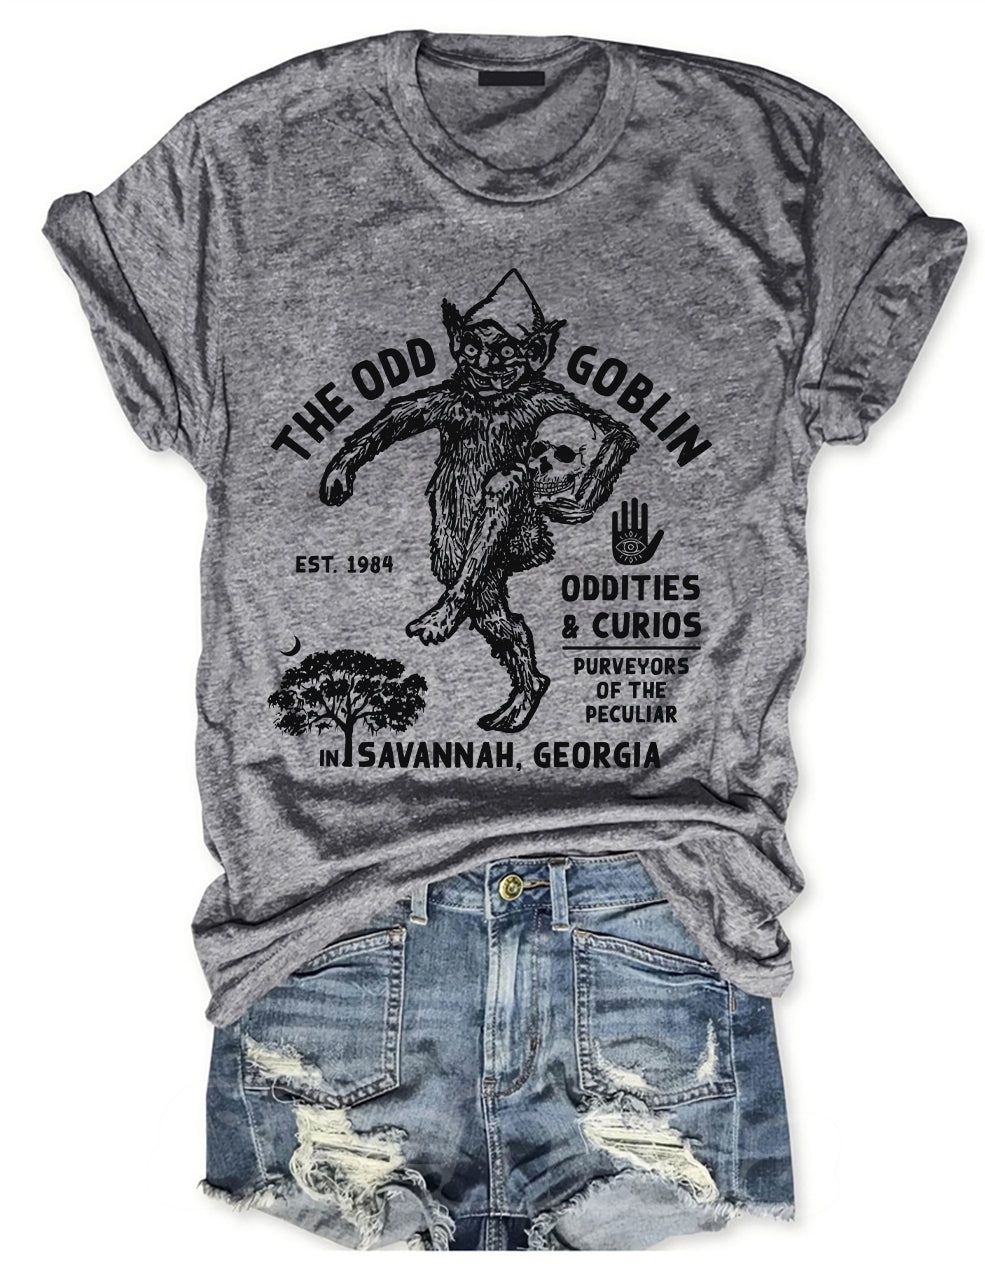 Oddities Goblin T-shirt